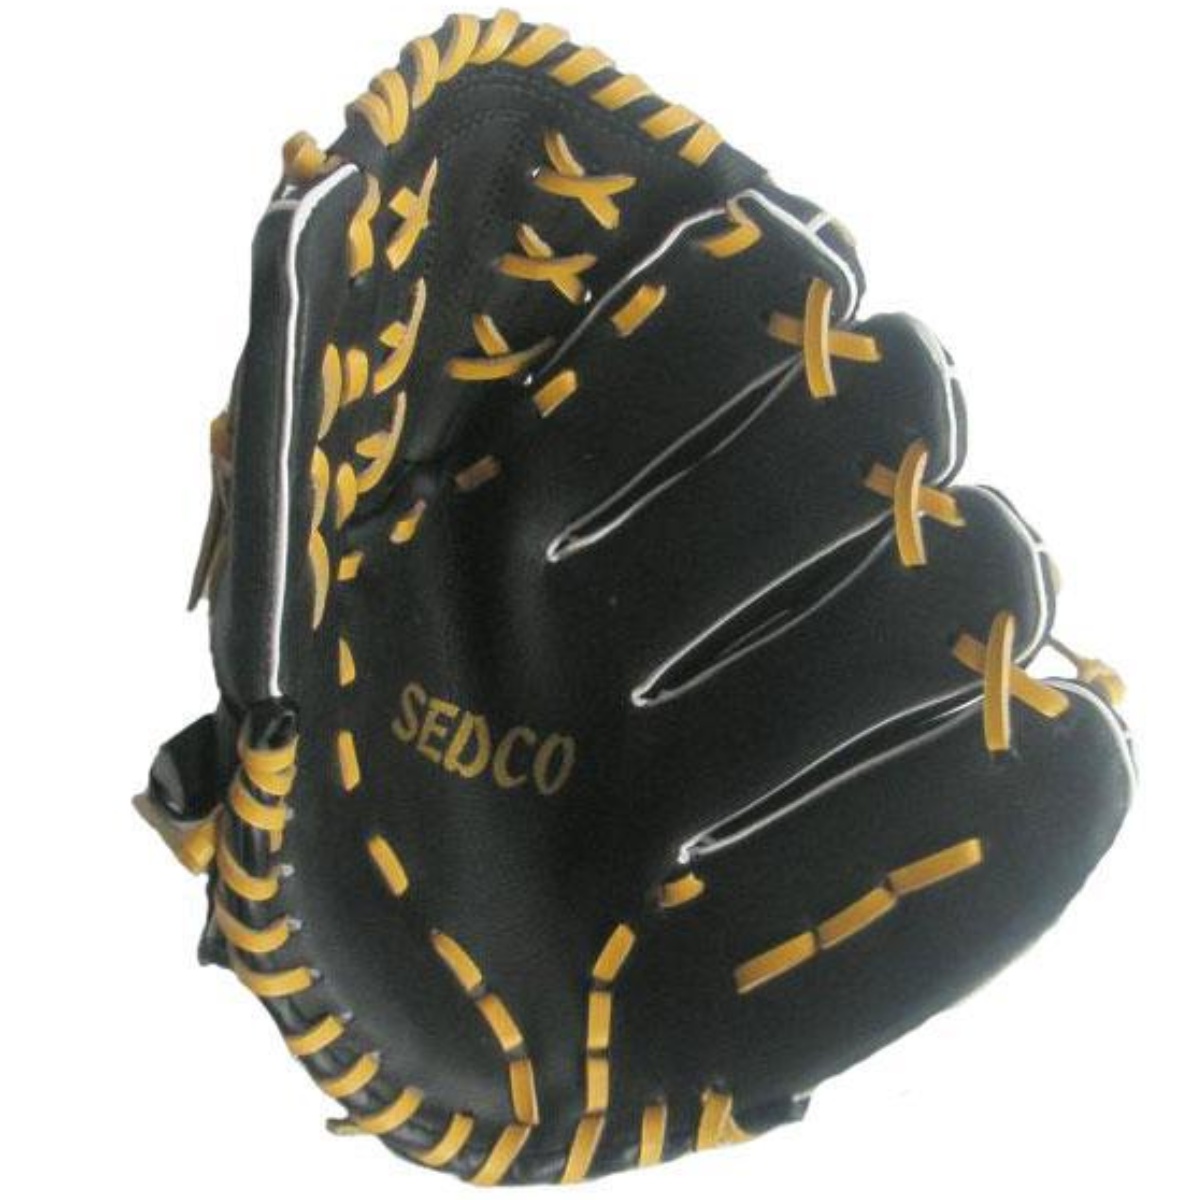 Baseball rukavice DH 120 - 12 pravá